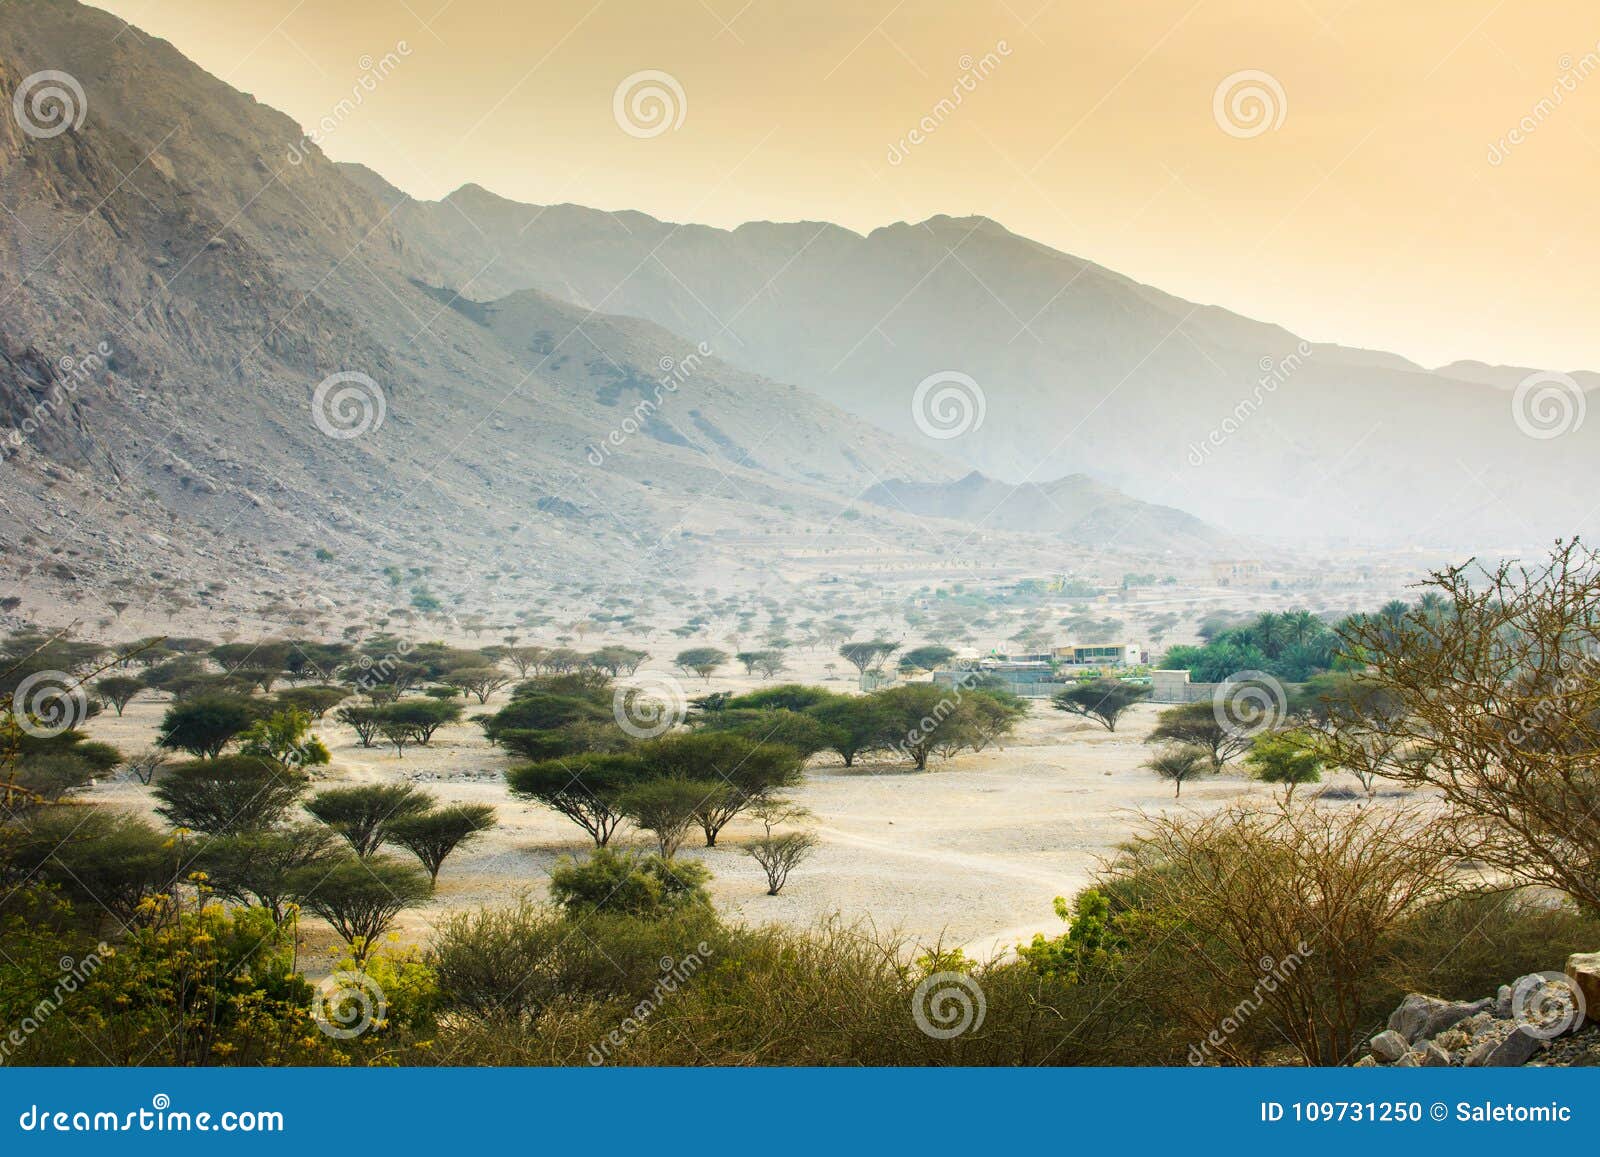 jabal jais mountain and desert landscape near ras al khaimah